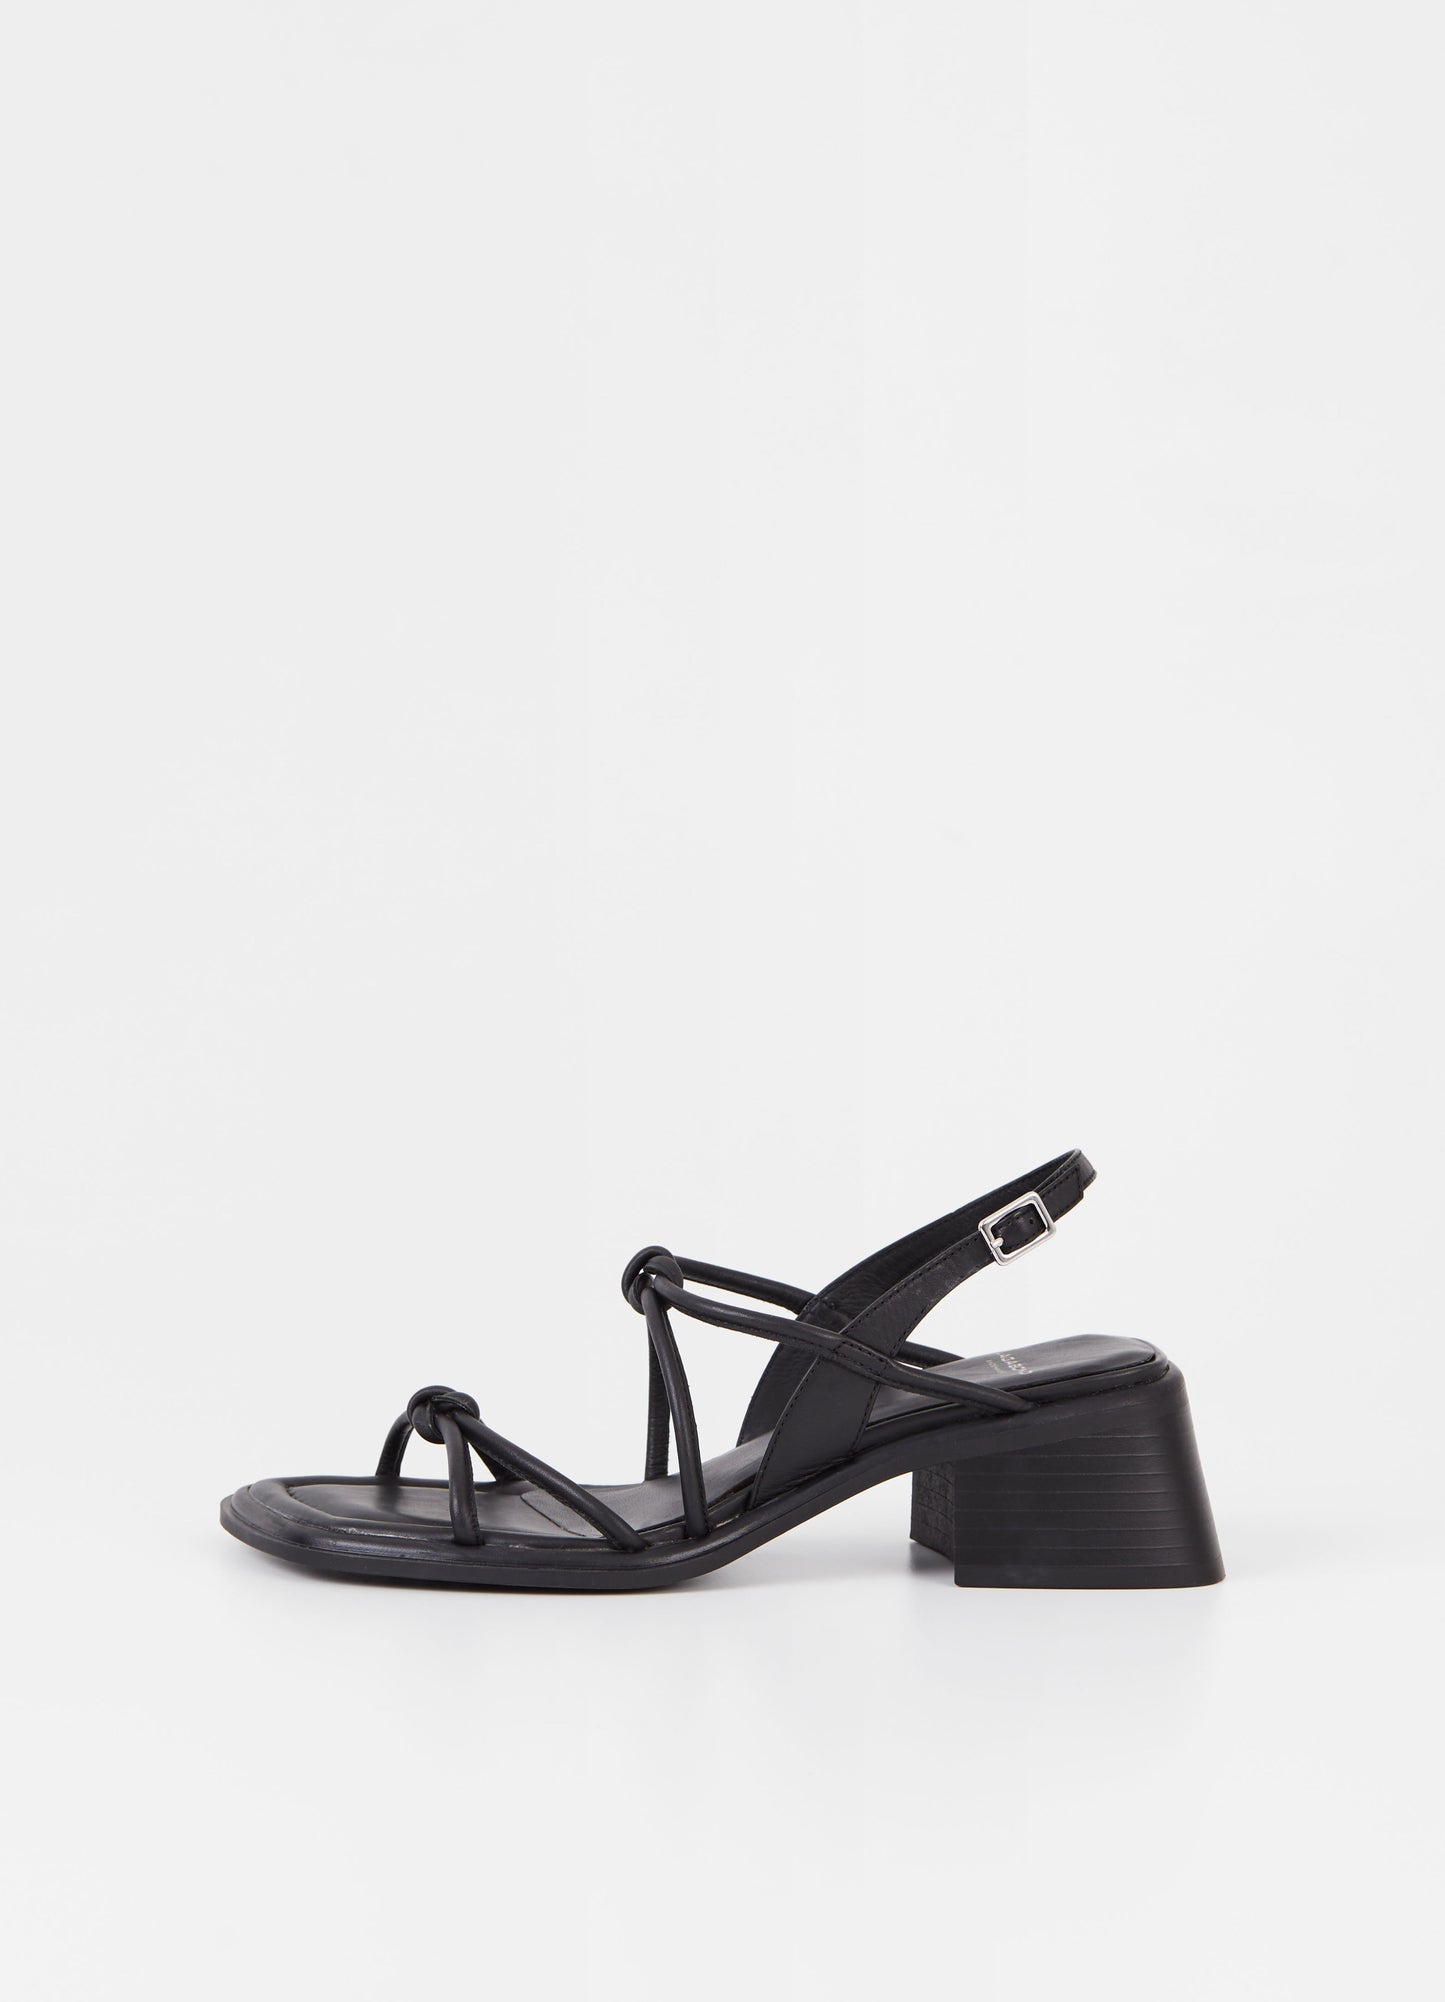 Vagabond - Inés heeled sandal in black leather straps